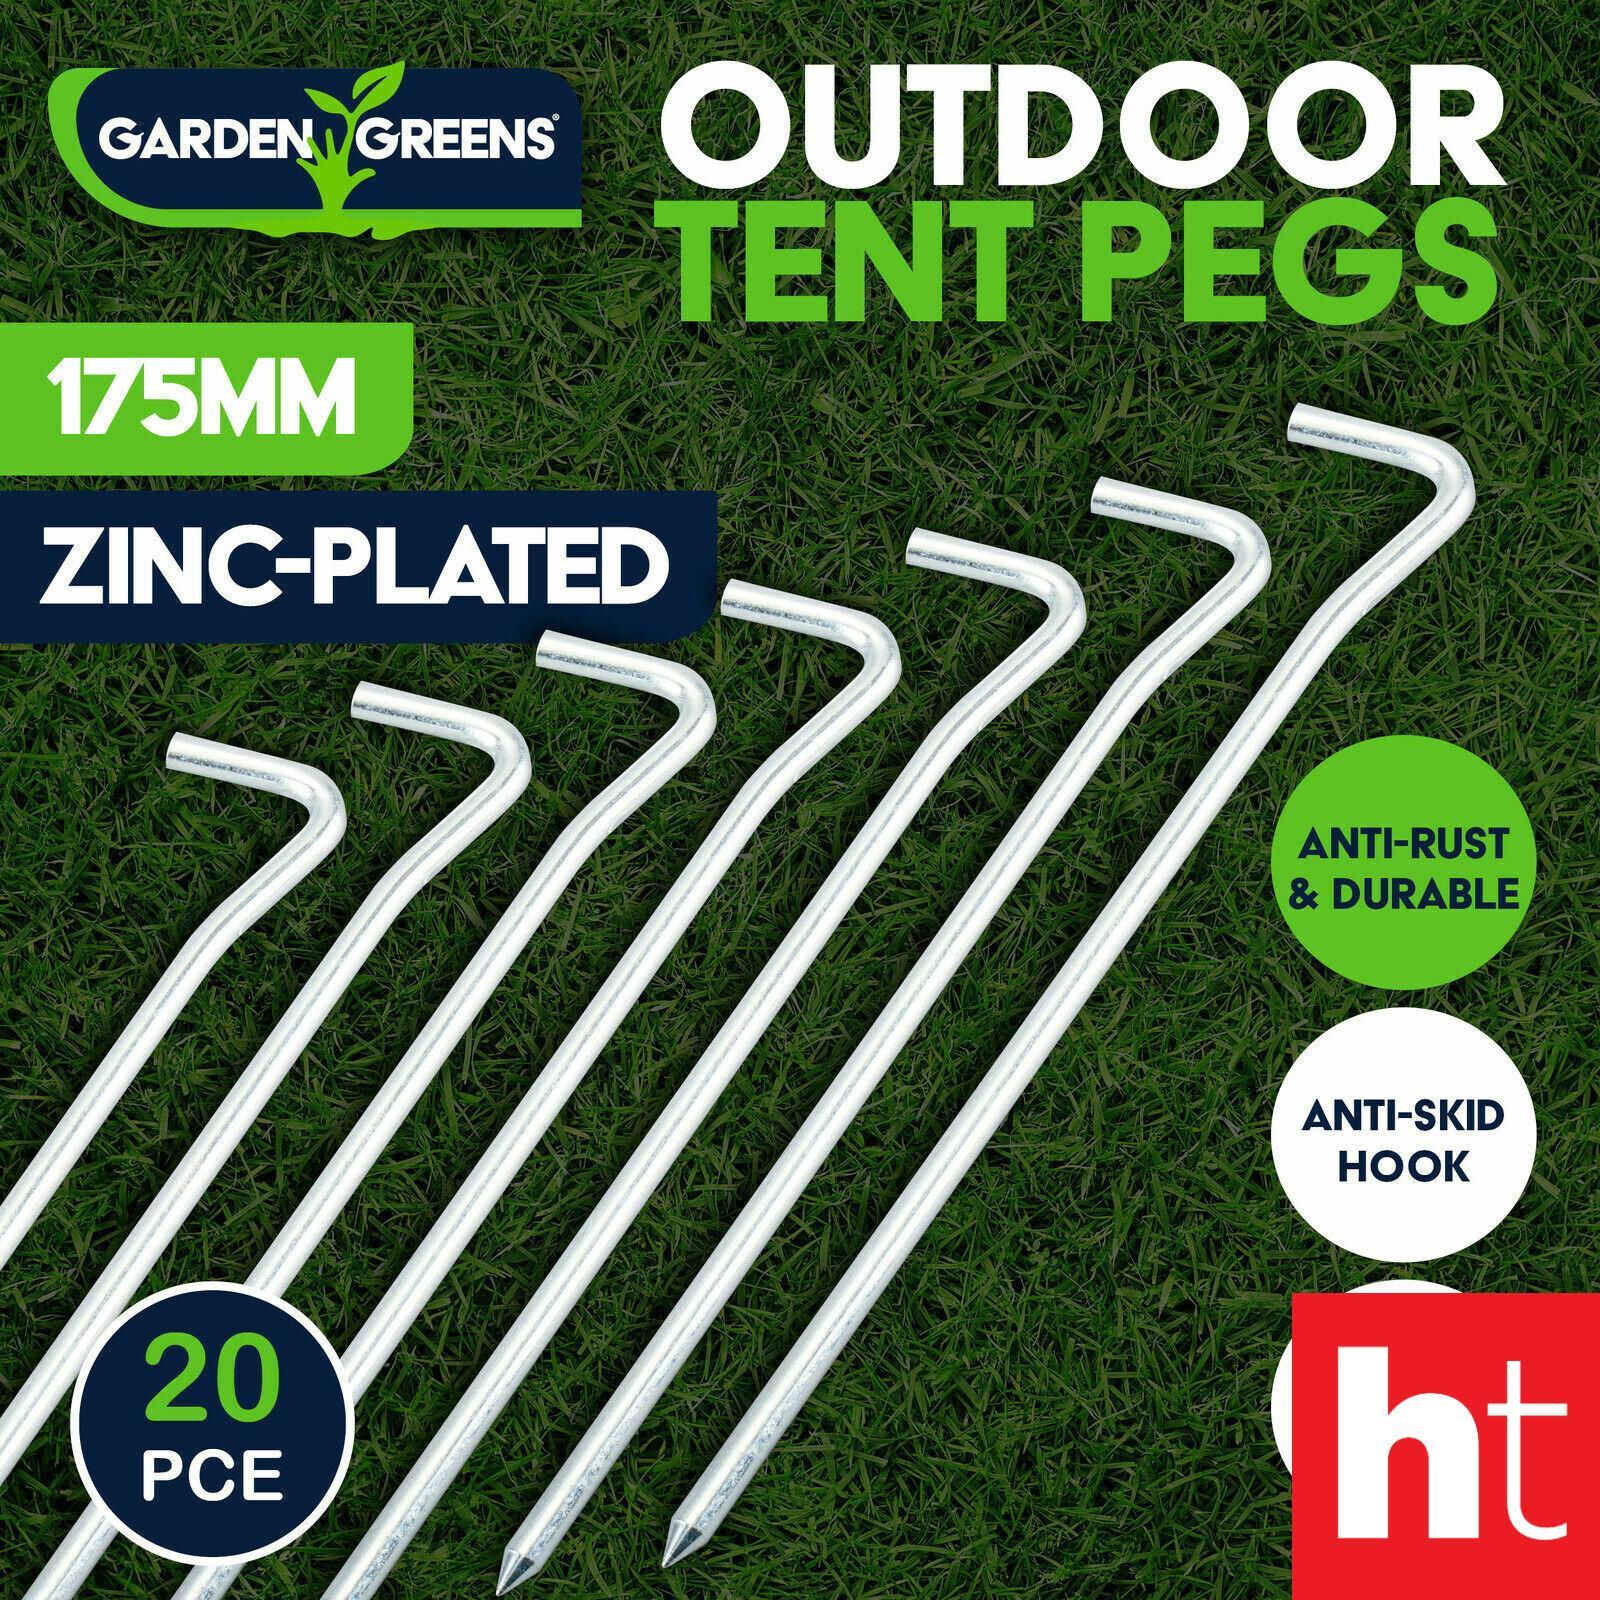 Garden Greens 20PCE Tent Pegs Multi Purpose Anti Rust Anti Skid 5 x 175mm